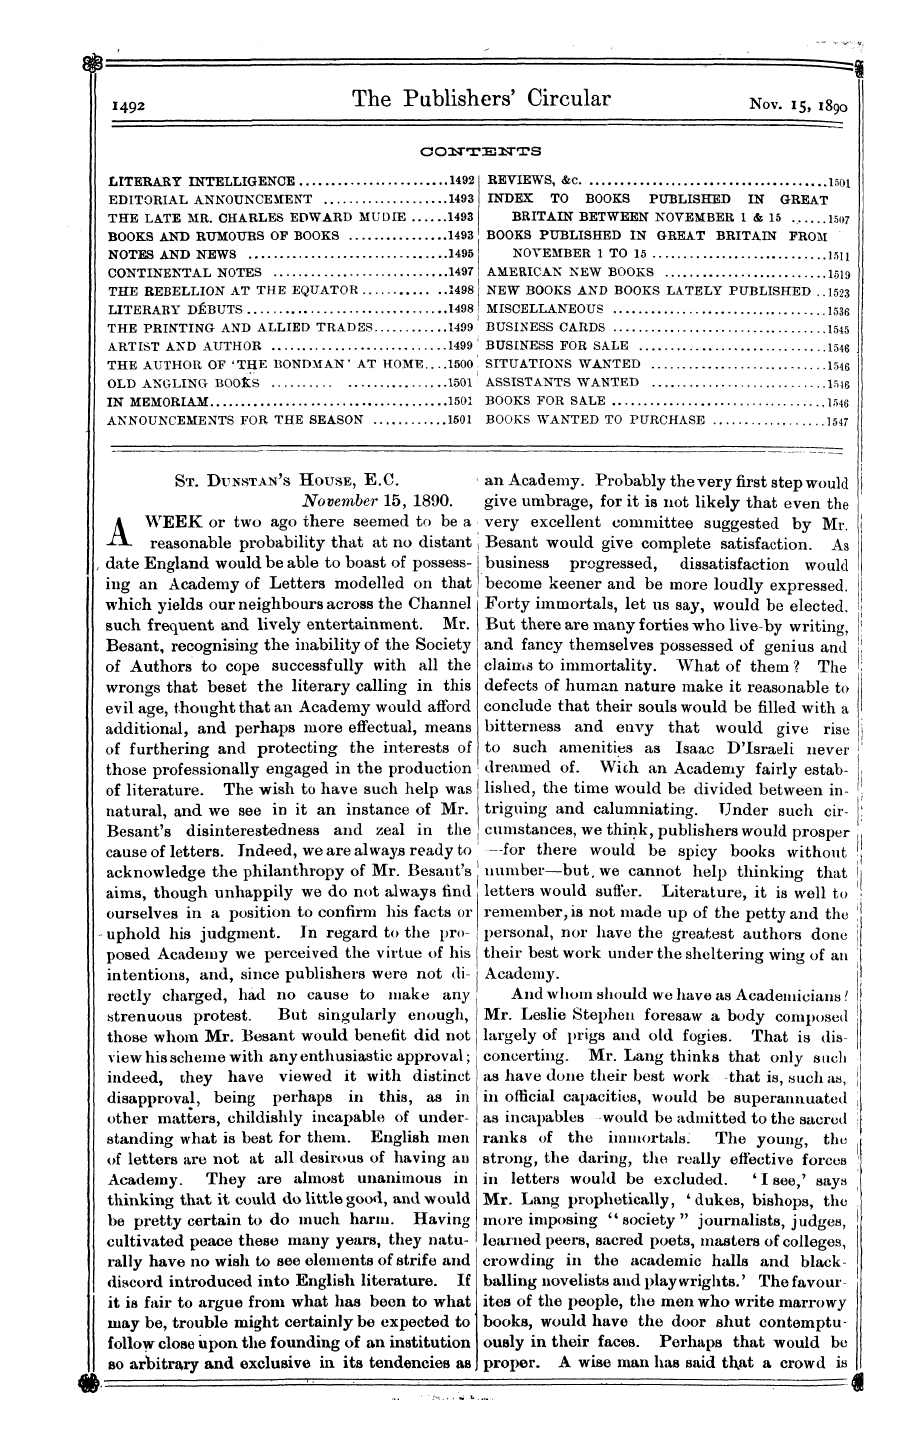 Publishers’ Circular (1880-1890): jS F Y, 1st edition - St. Dunstan's House, E.C. November 15, 1890.